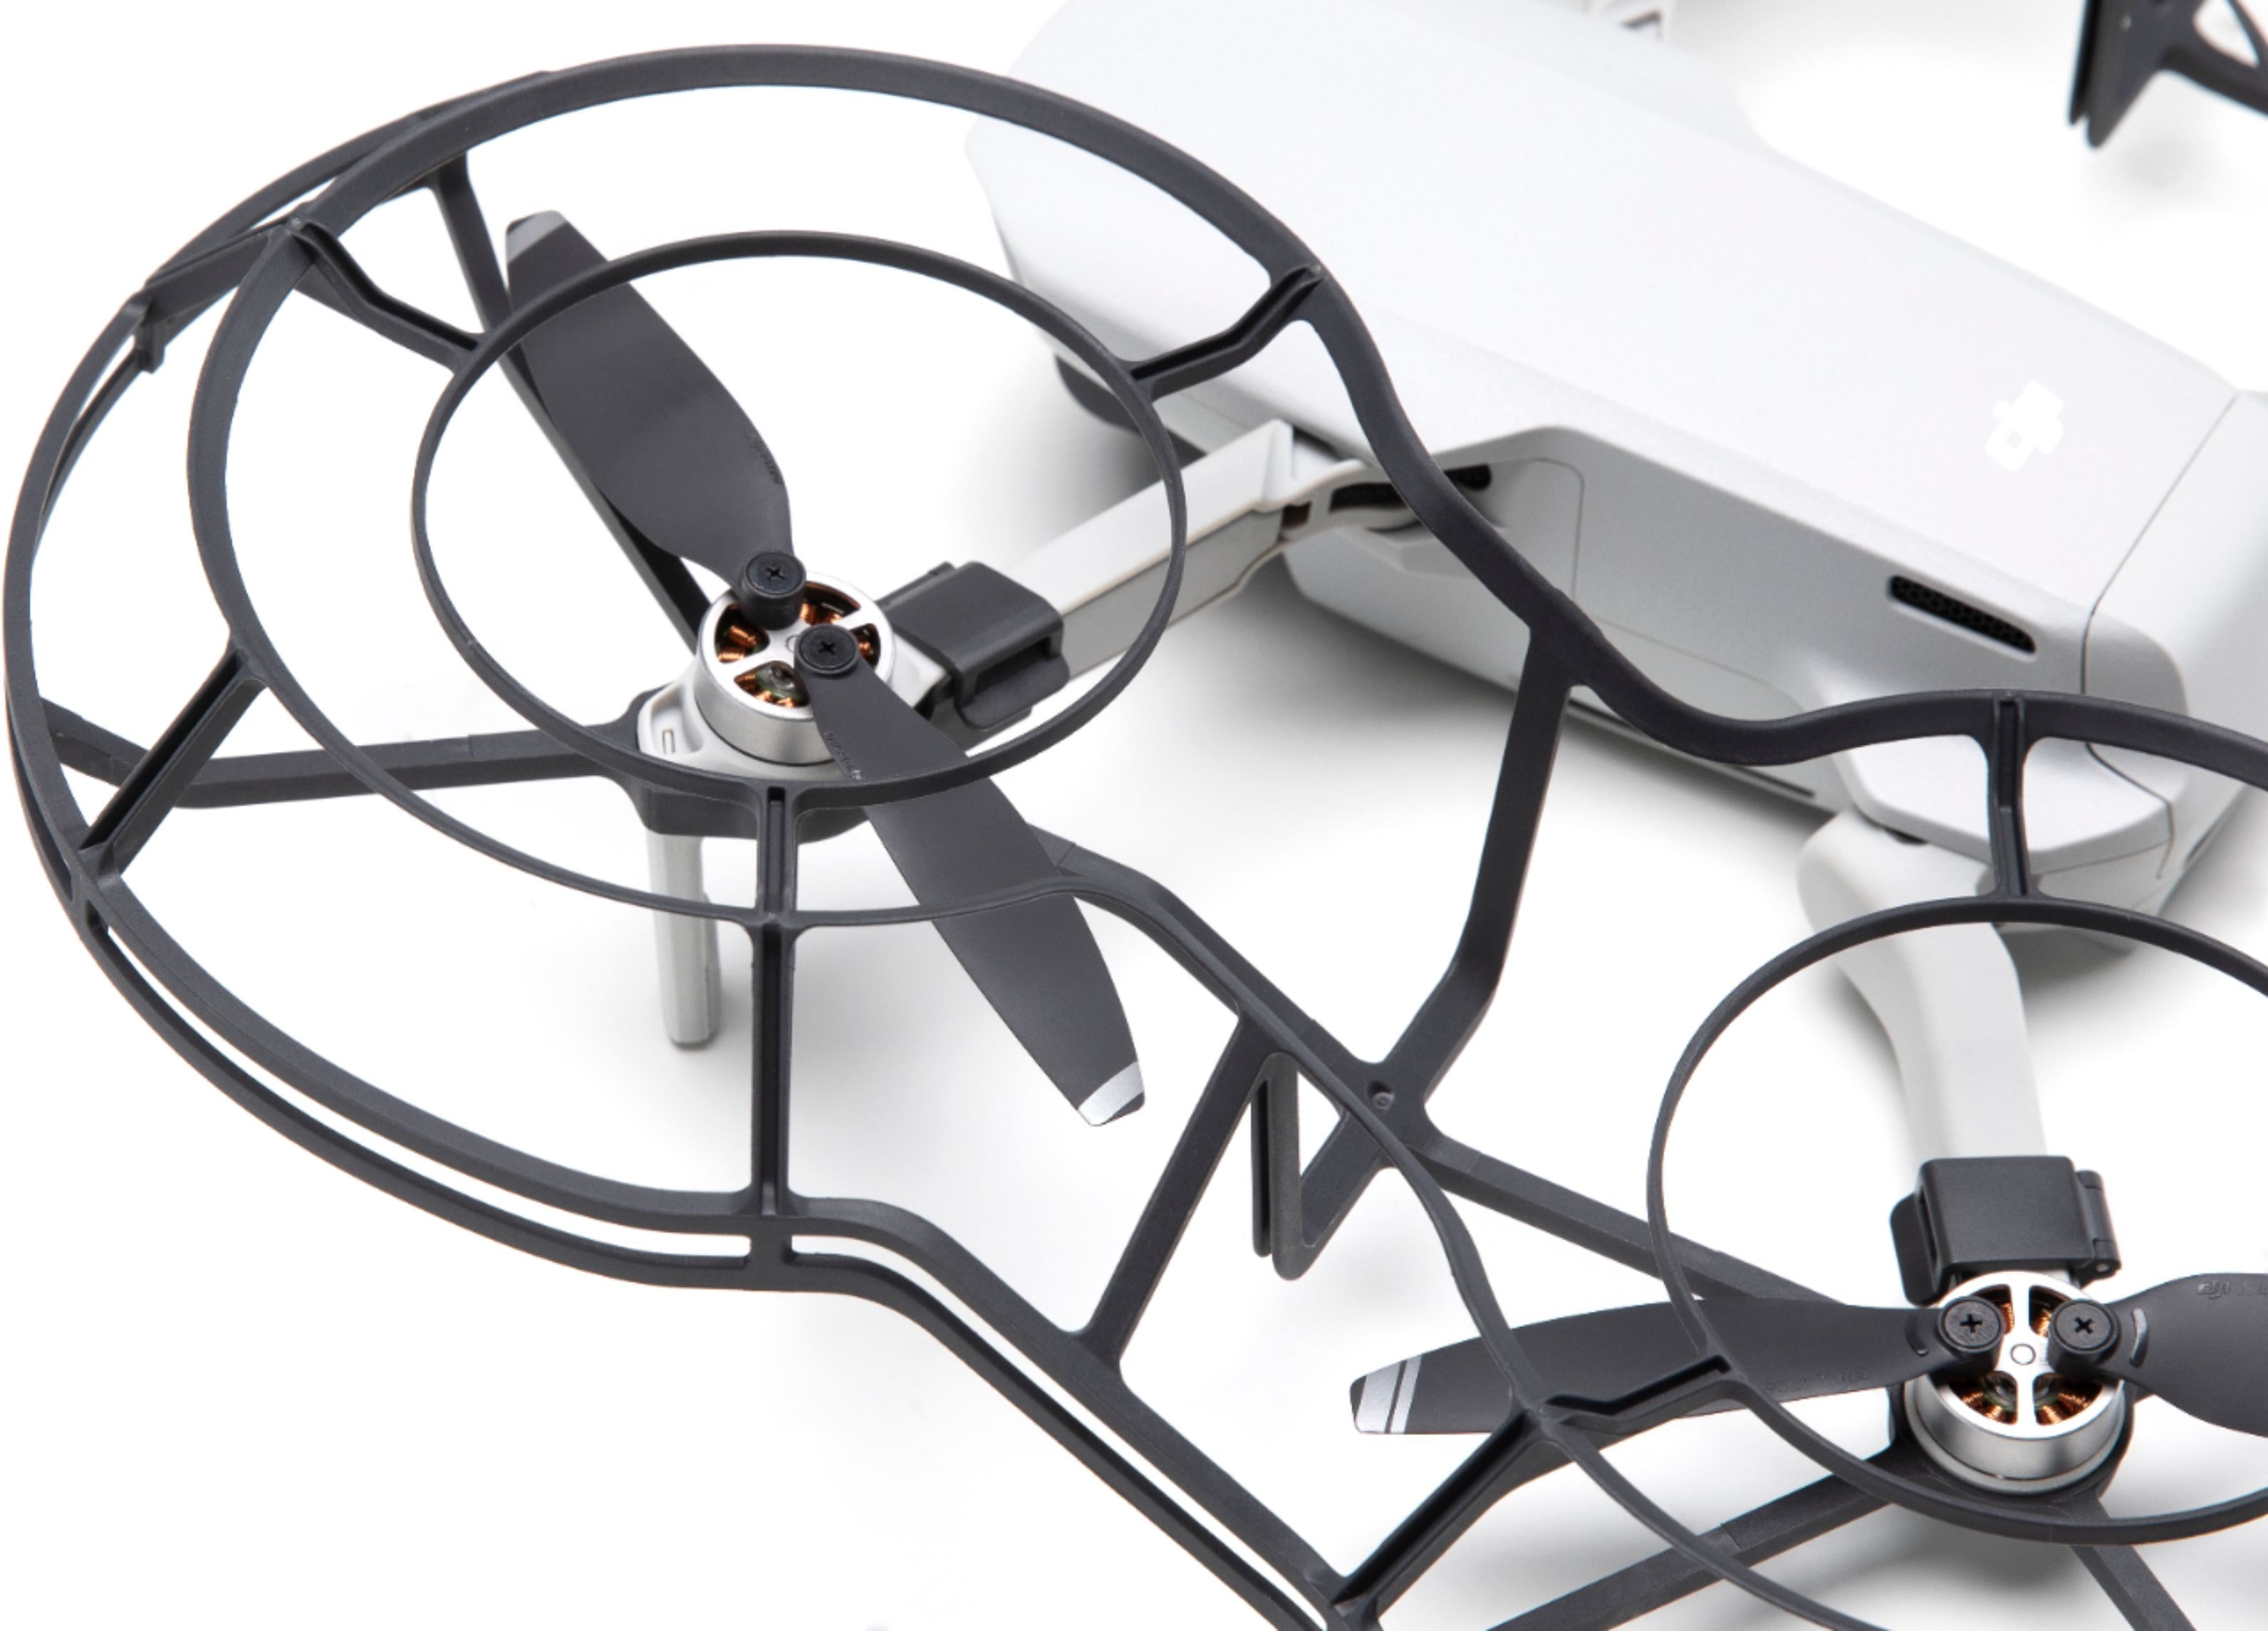 DJI Propeller Cage-part 31 Drone Flyer for sale online 